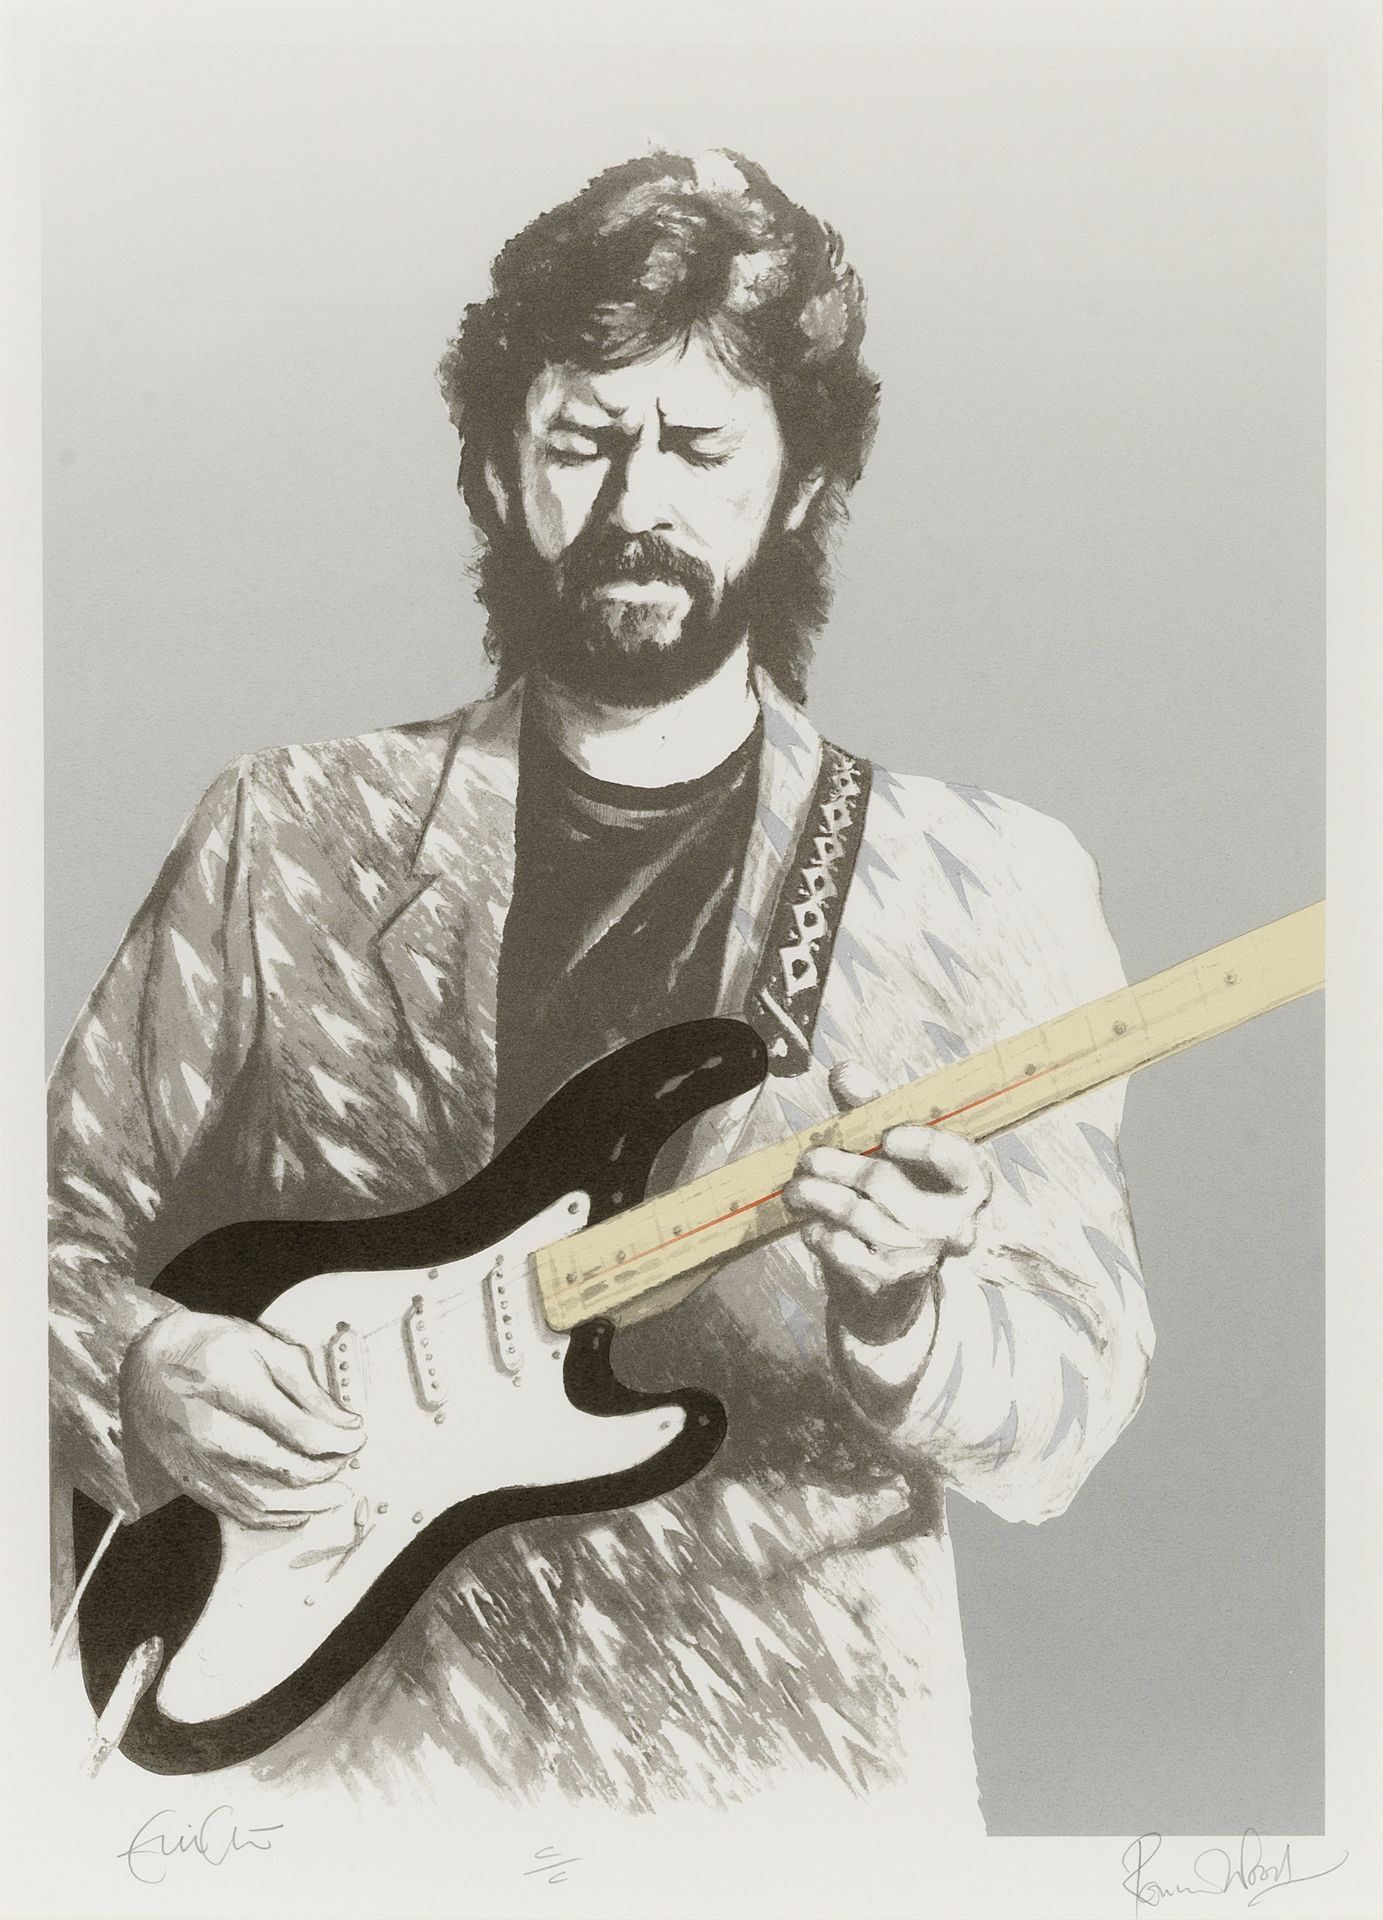 Ronnie Wood (British, born 1947): Eric Clapton, 1988,